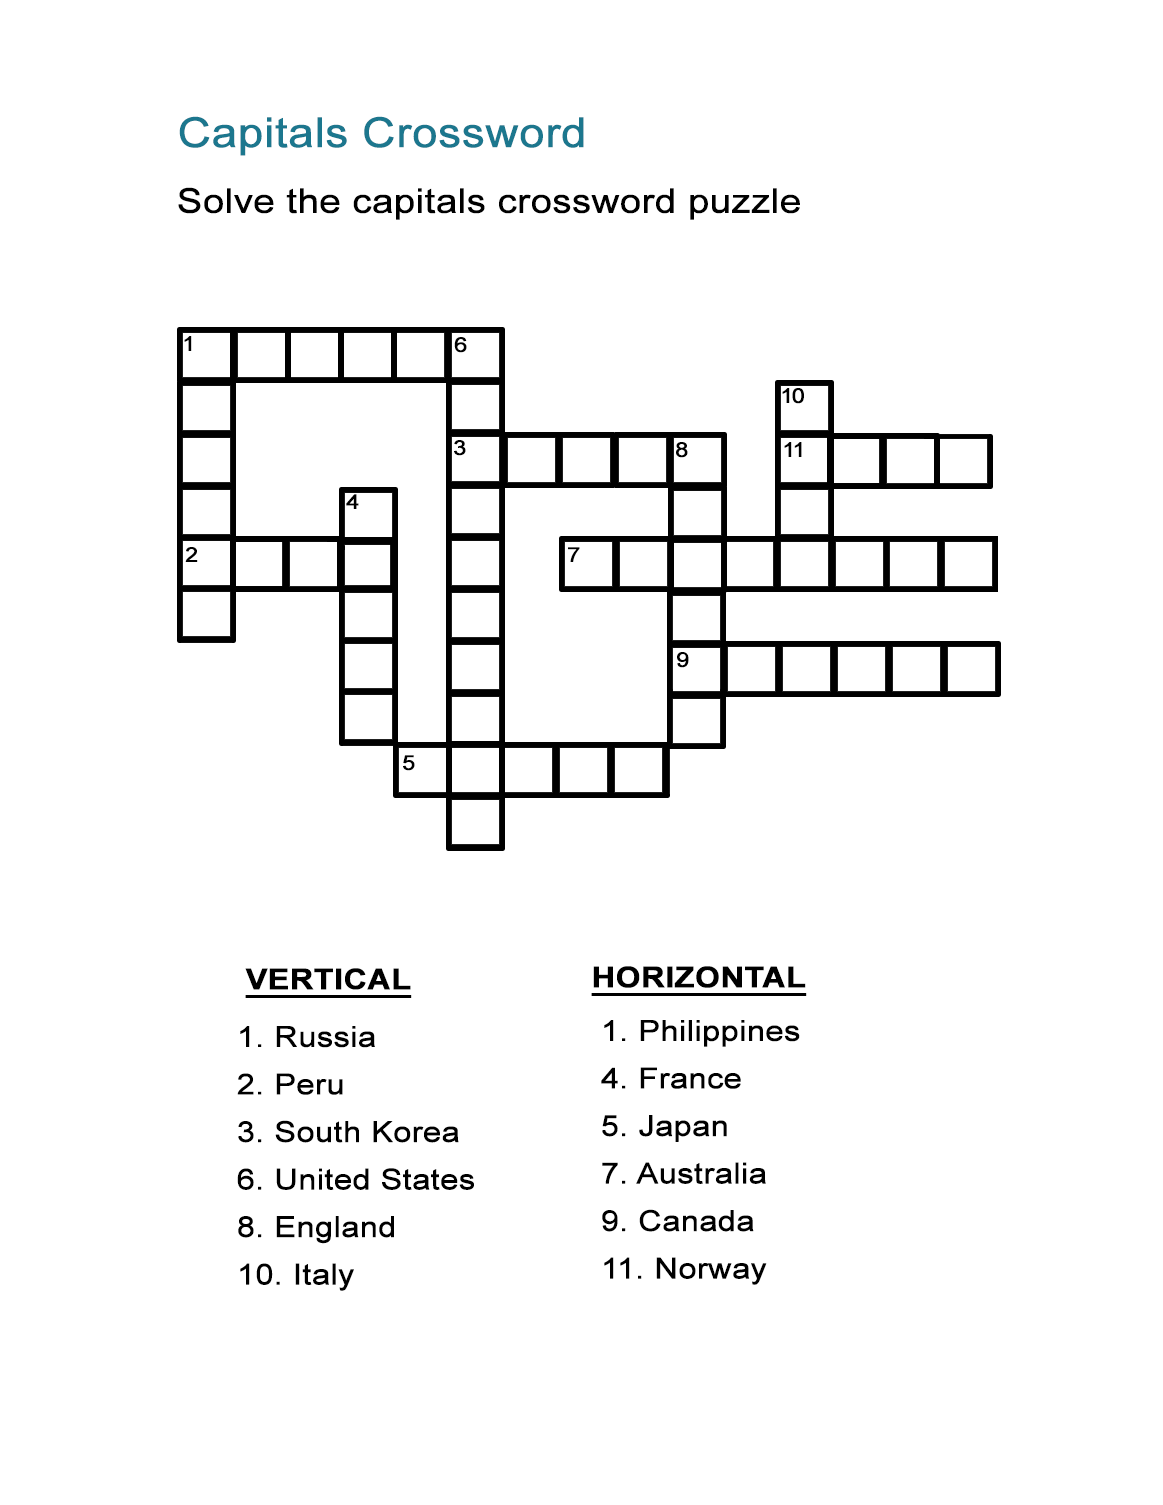 canonprintermx410: 25 Inspirational Overall Crossword Clue